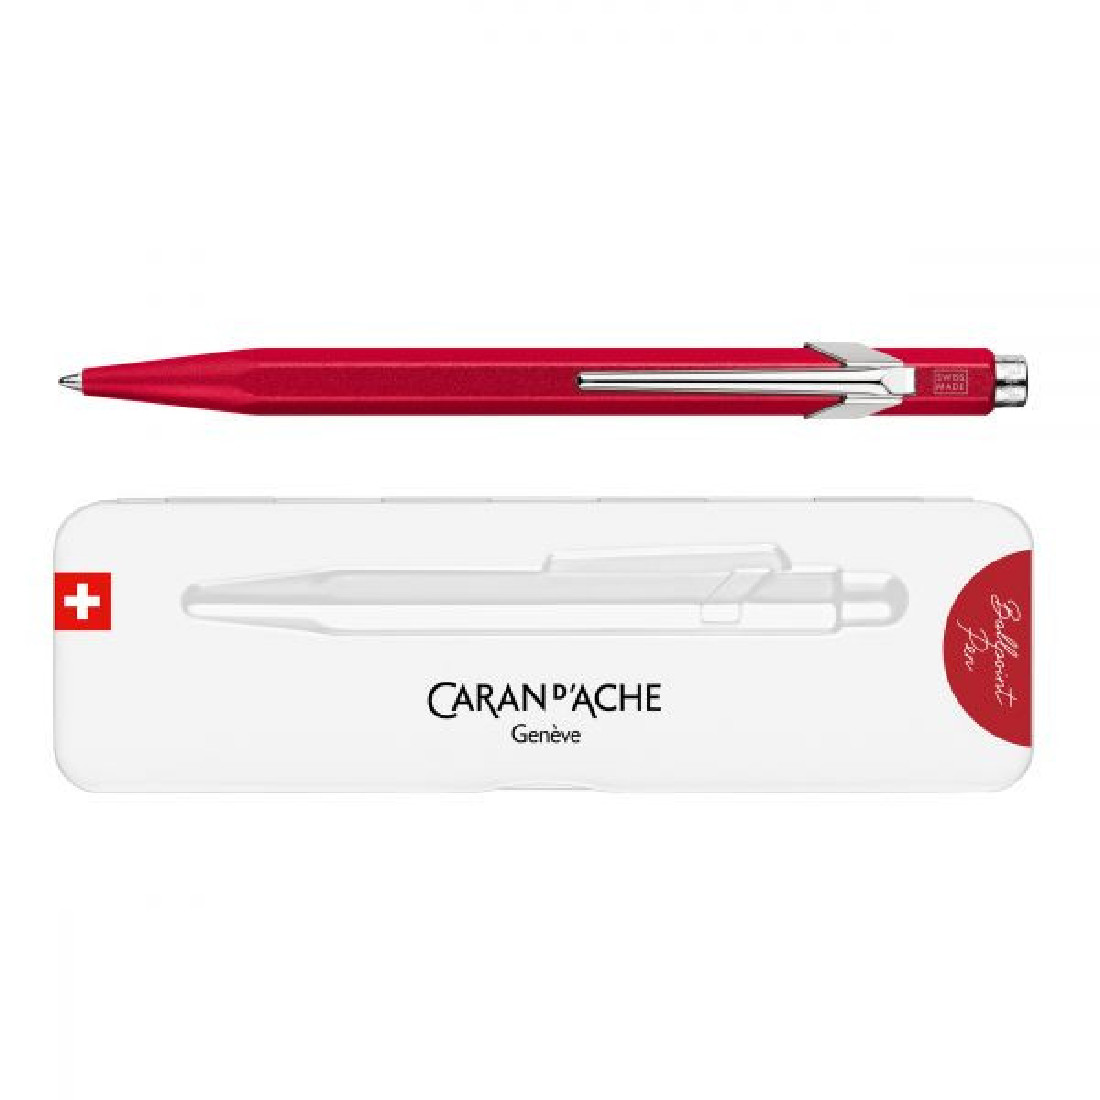 Caran Dache 849 metallic red ballpoint pen, with slim metal box